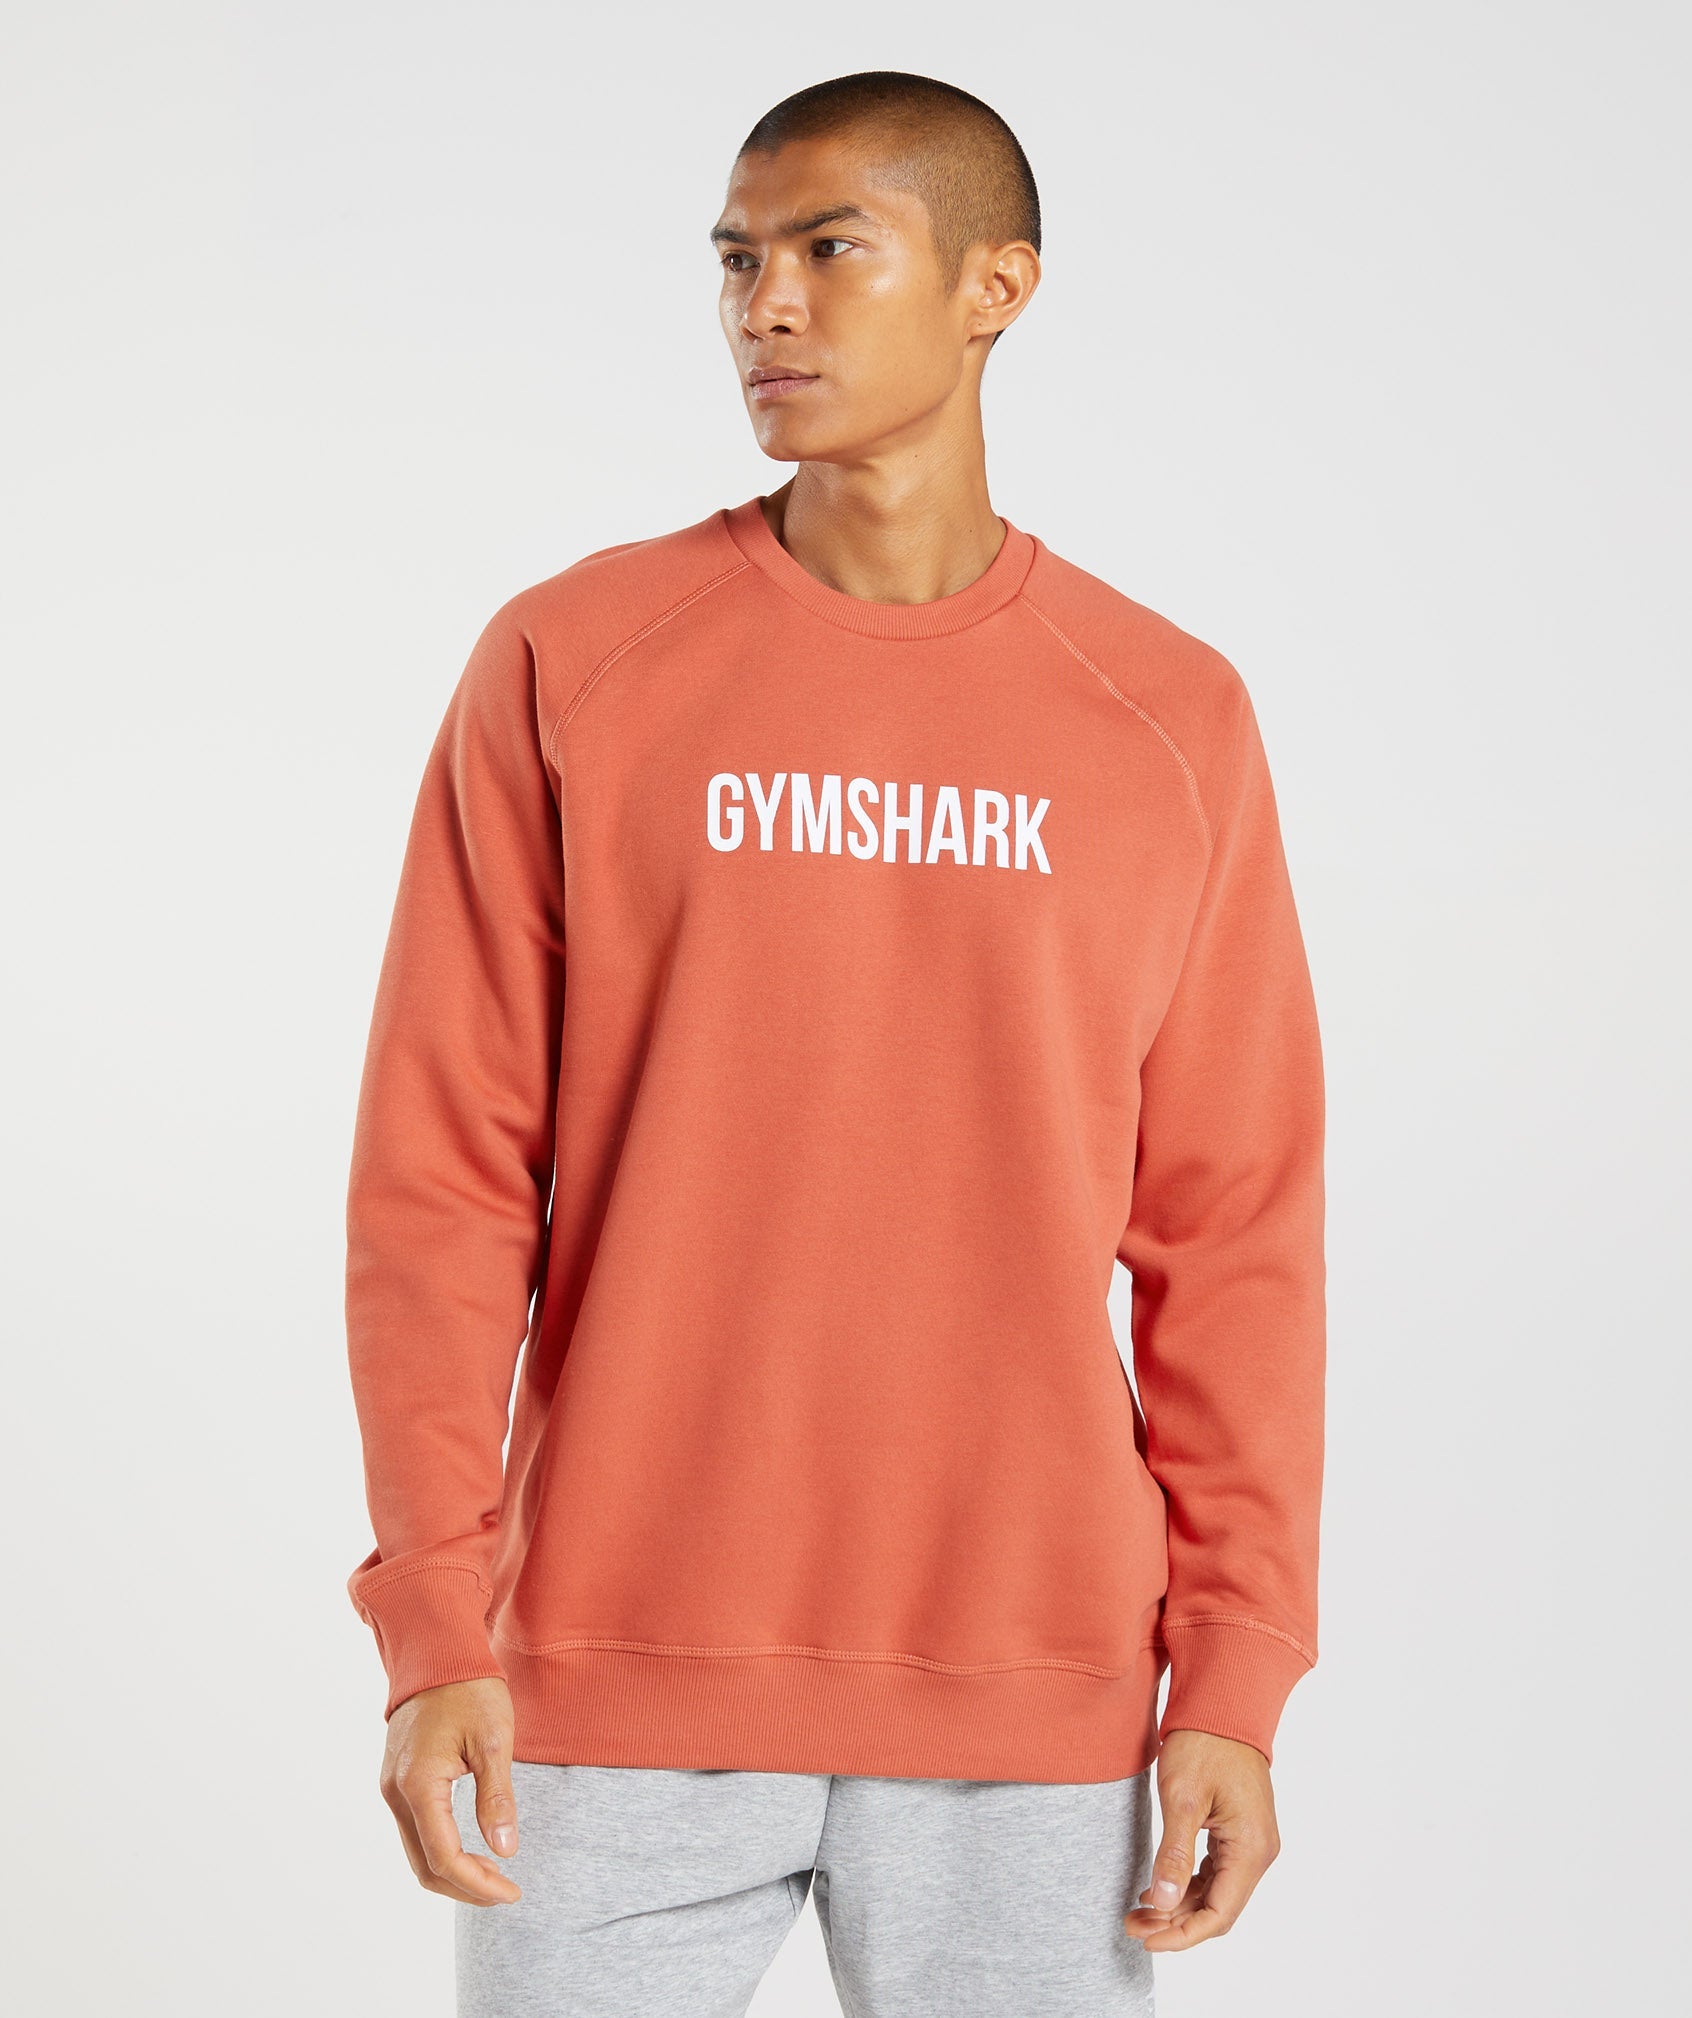 Gymshark Apollo Crew Sweatshirts Herren Rot | 1485796-TJ